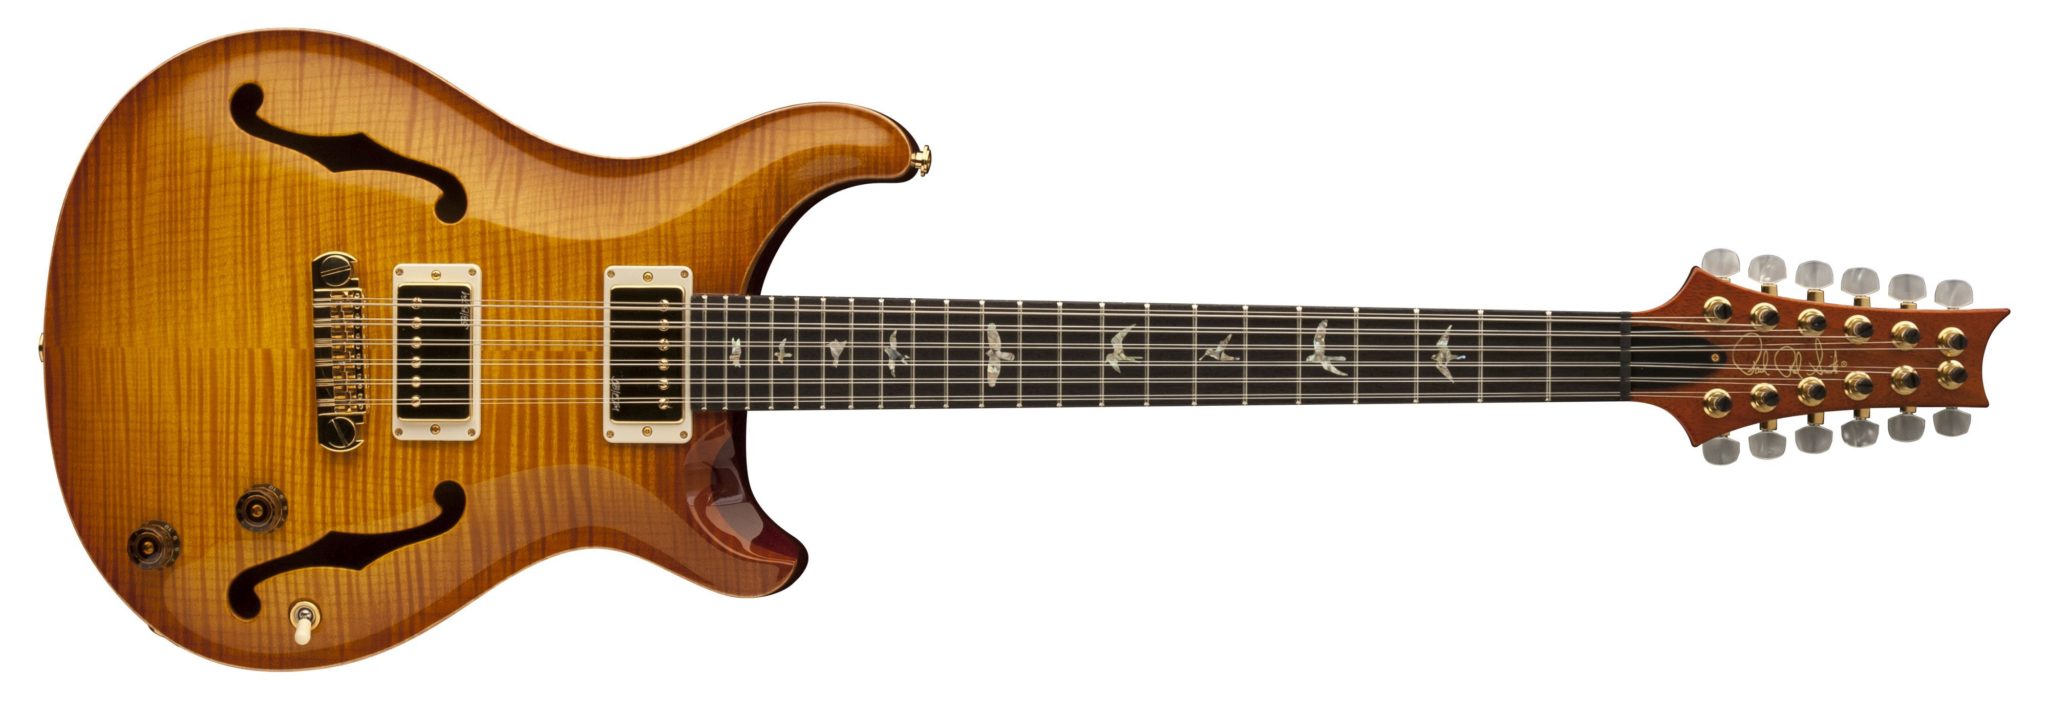 PRS Hollowbody II 12-Saiter E-Gitarre in der Farbe Sunburst.